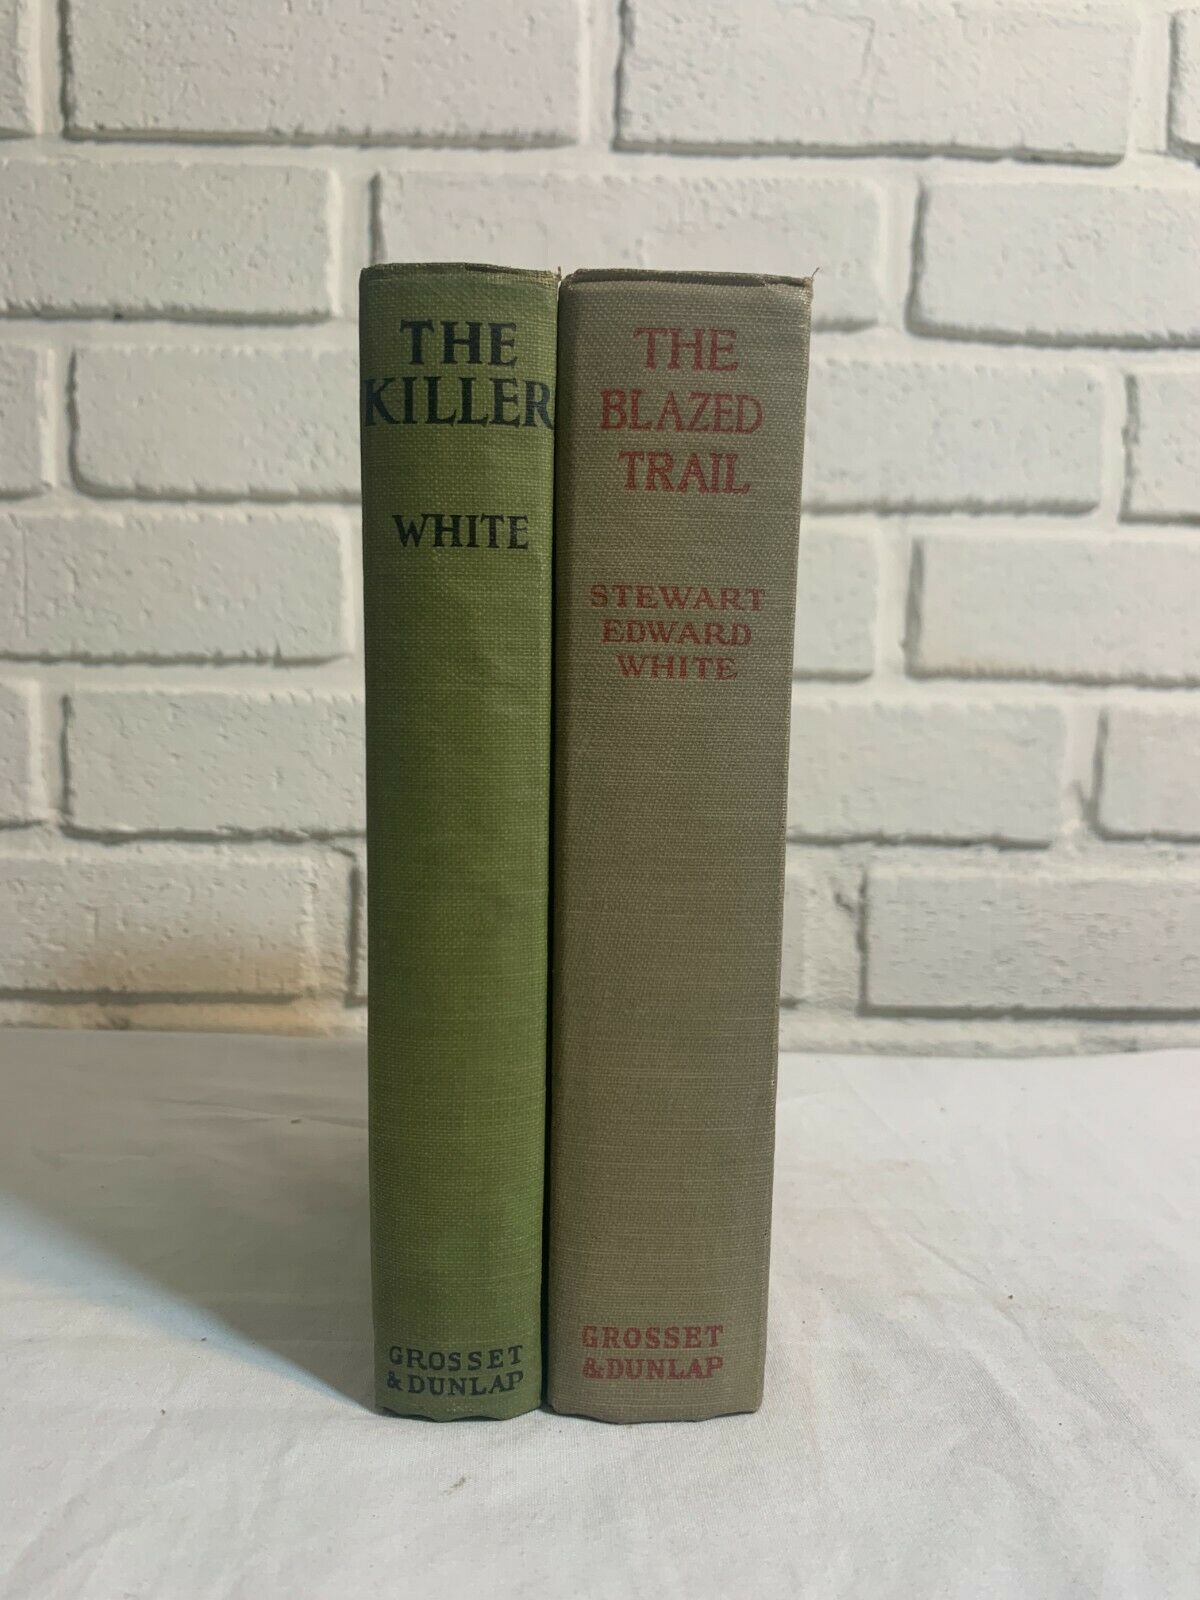 Stewart Edward White 2 Book Lot, The Killer & The Blazed Trail C2